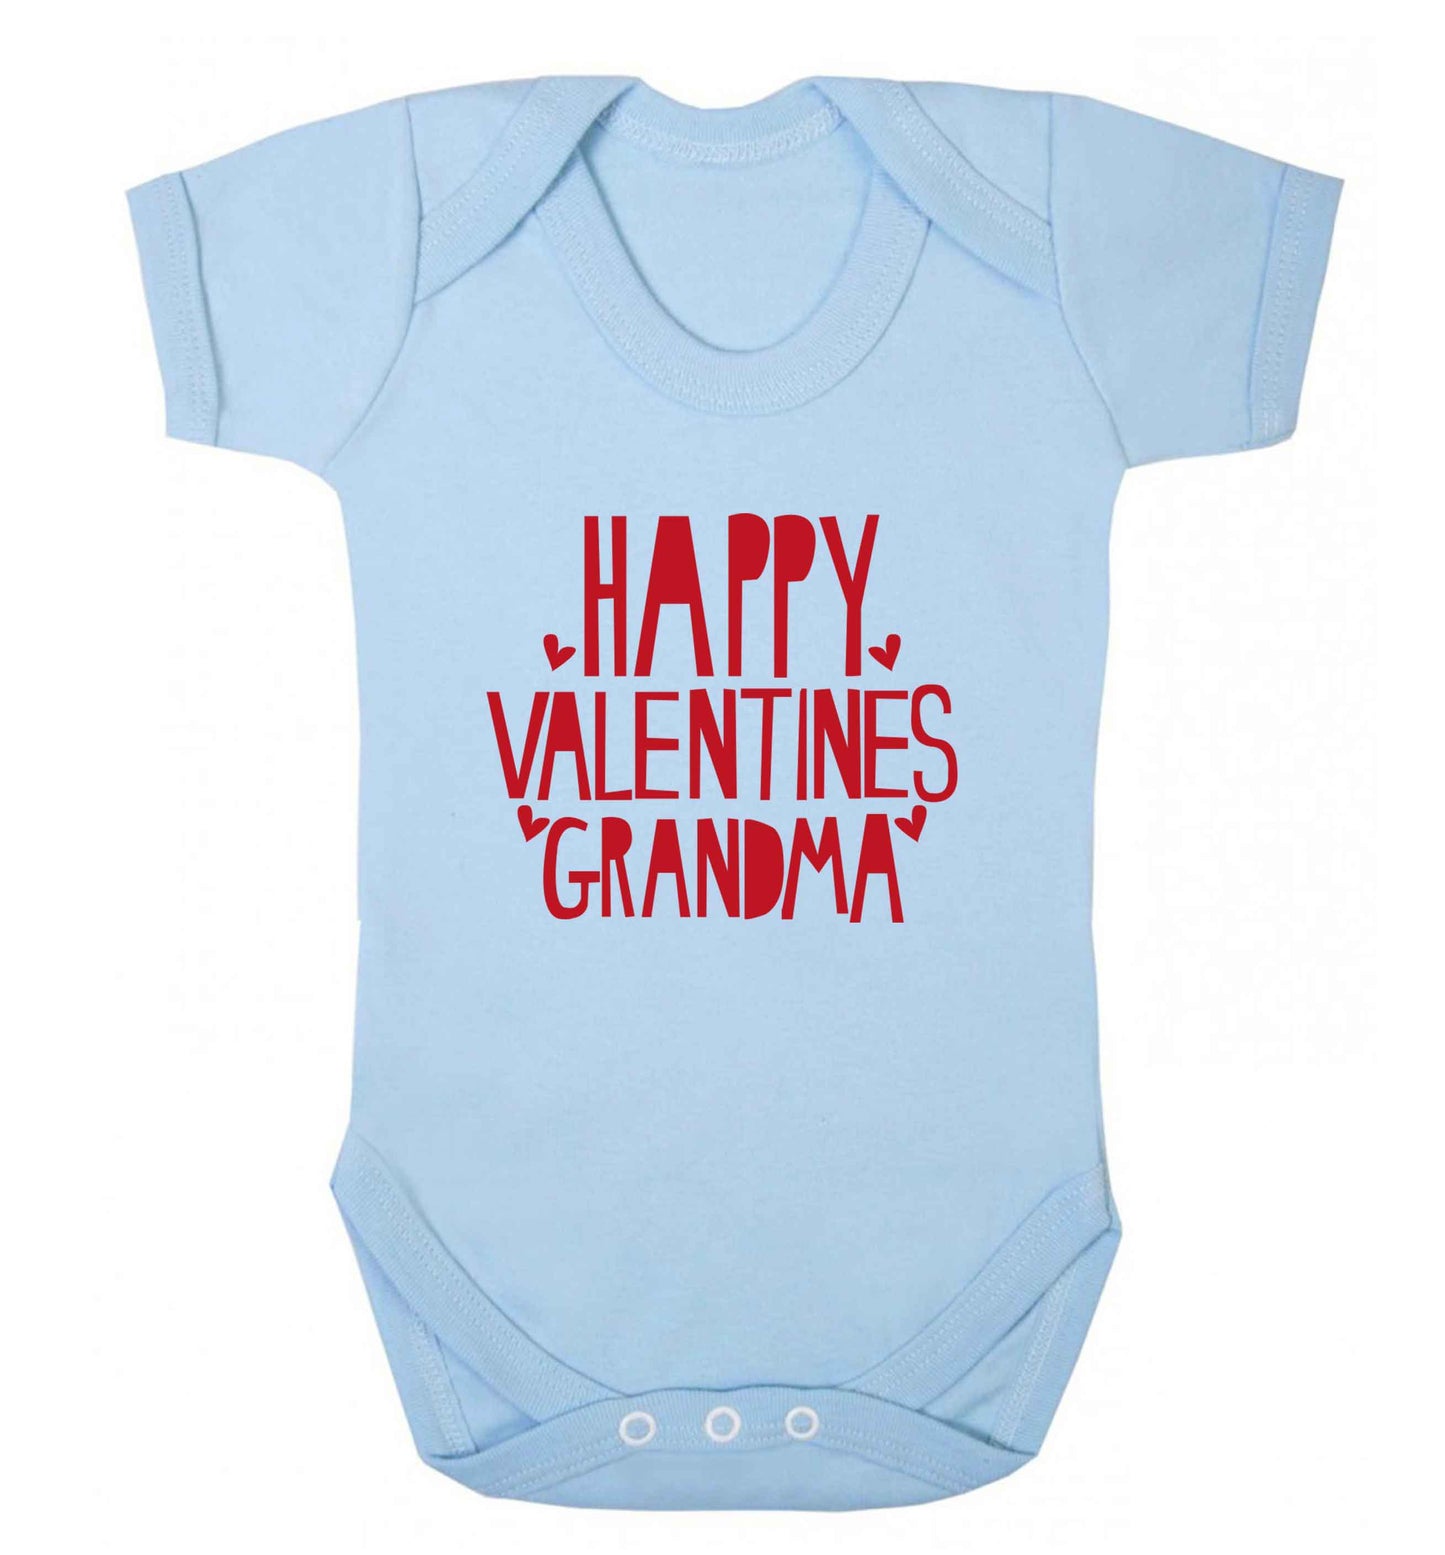 Happy valentines grandma baby vest pale blue 18-24 months